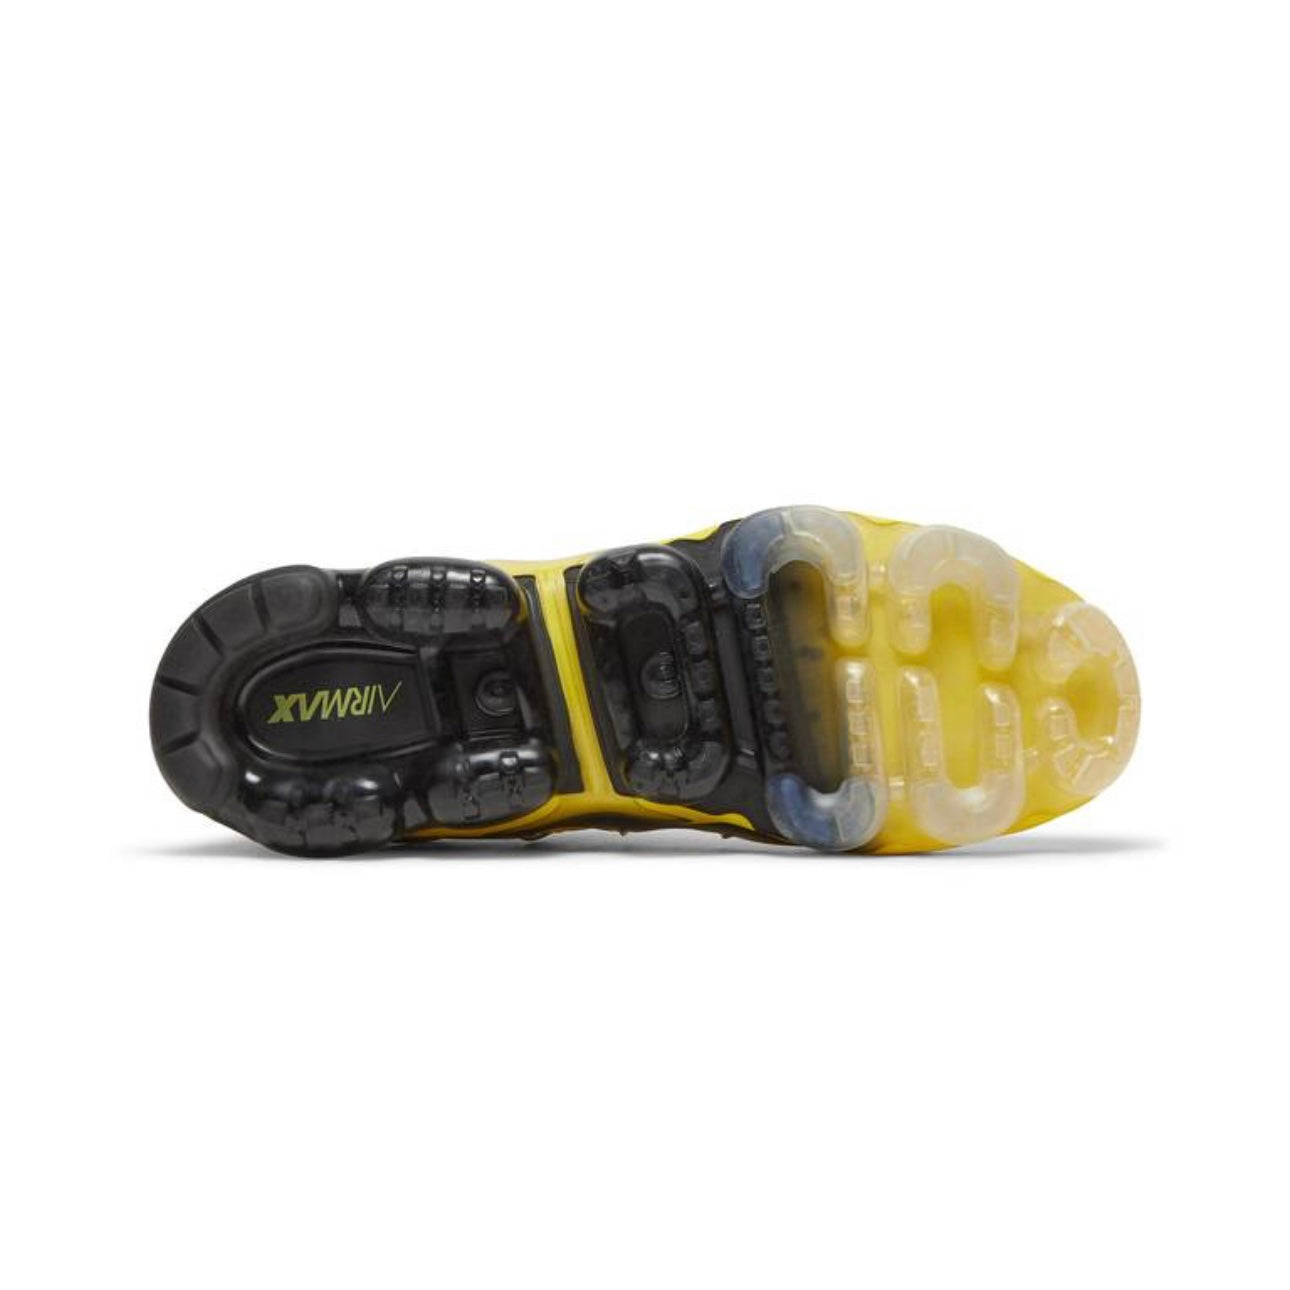 Nike Air Vapormax Plus "Opti Yellow"